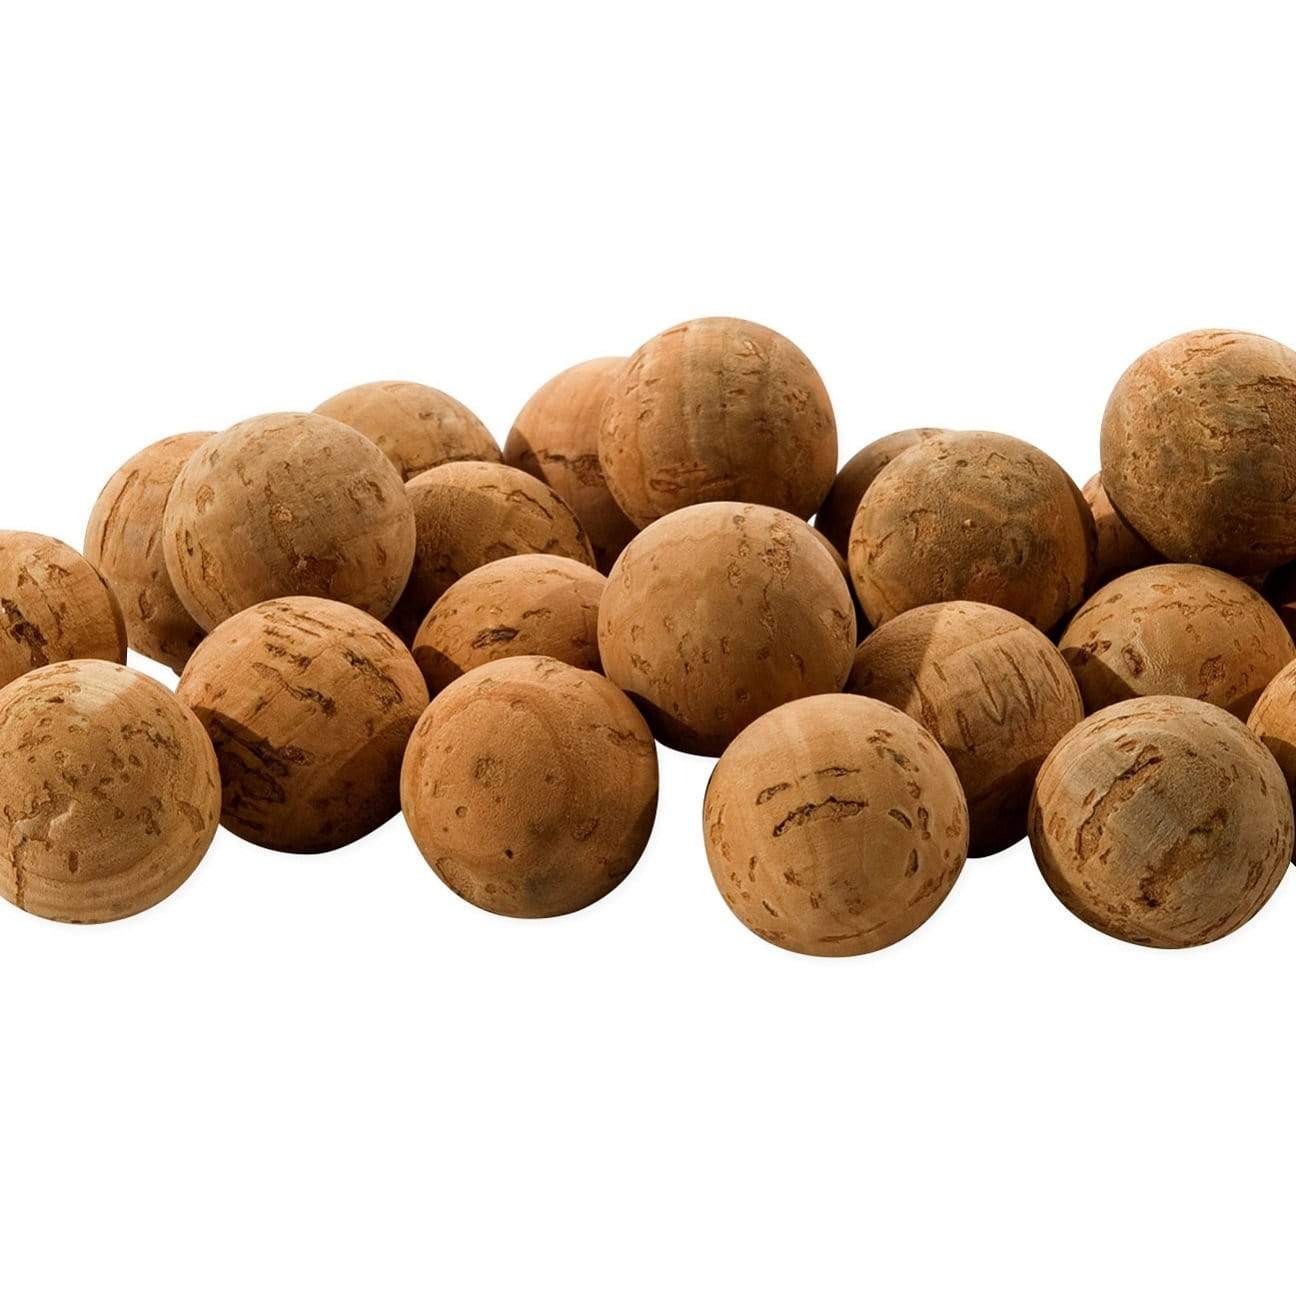 21 medium natural cork balls without a hole.